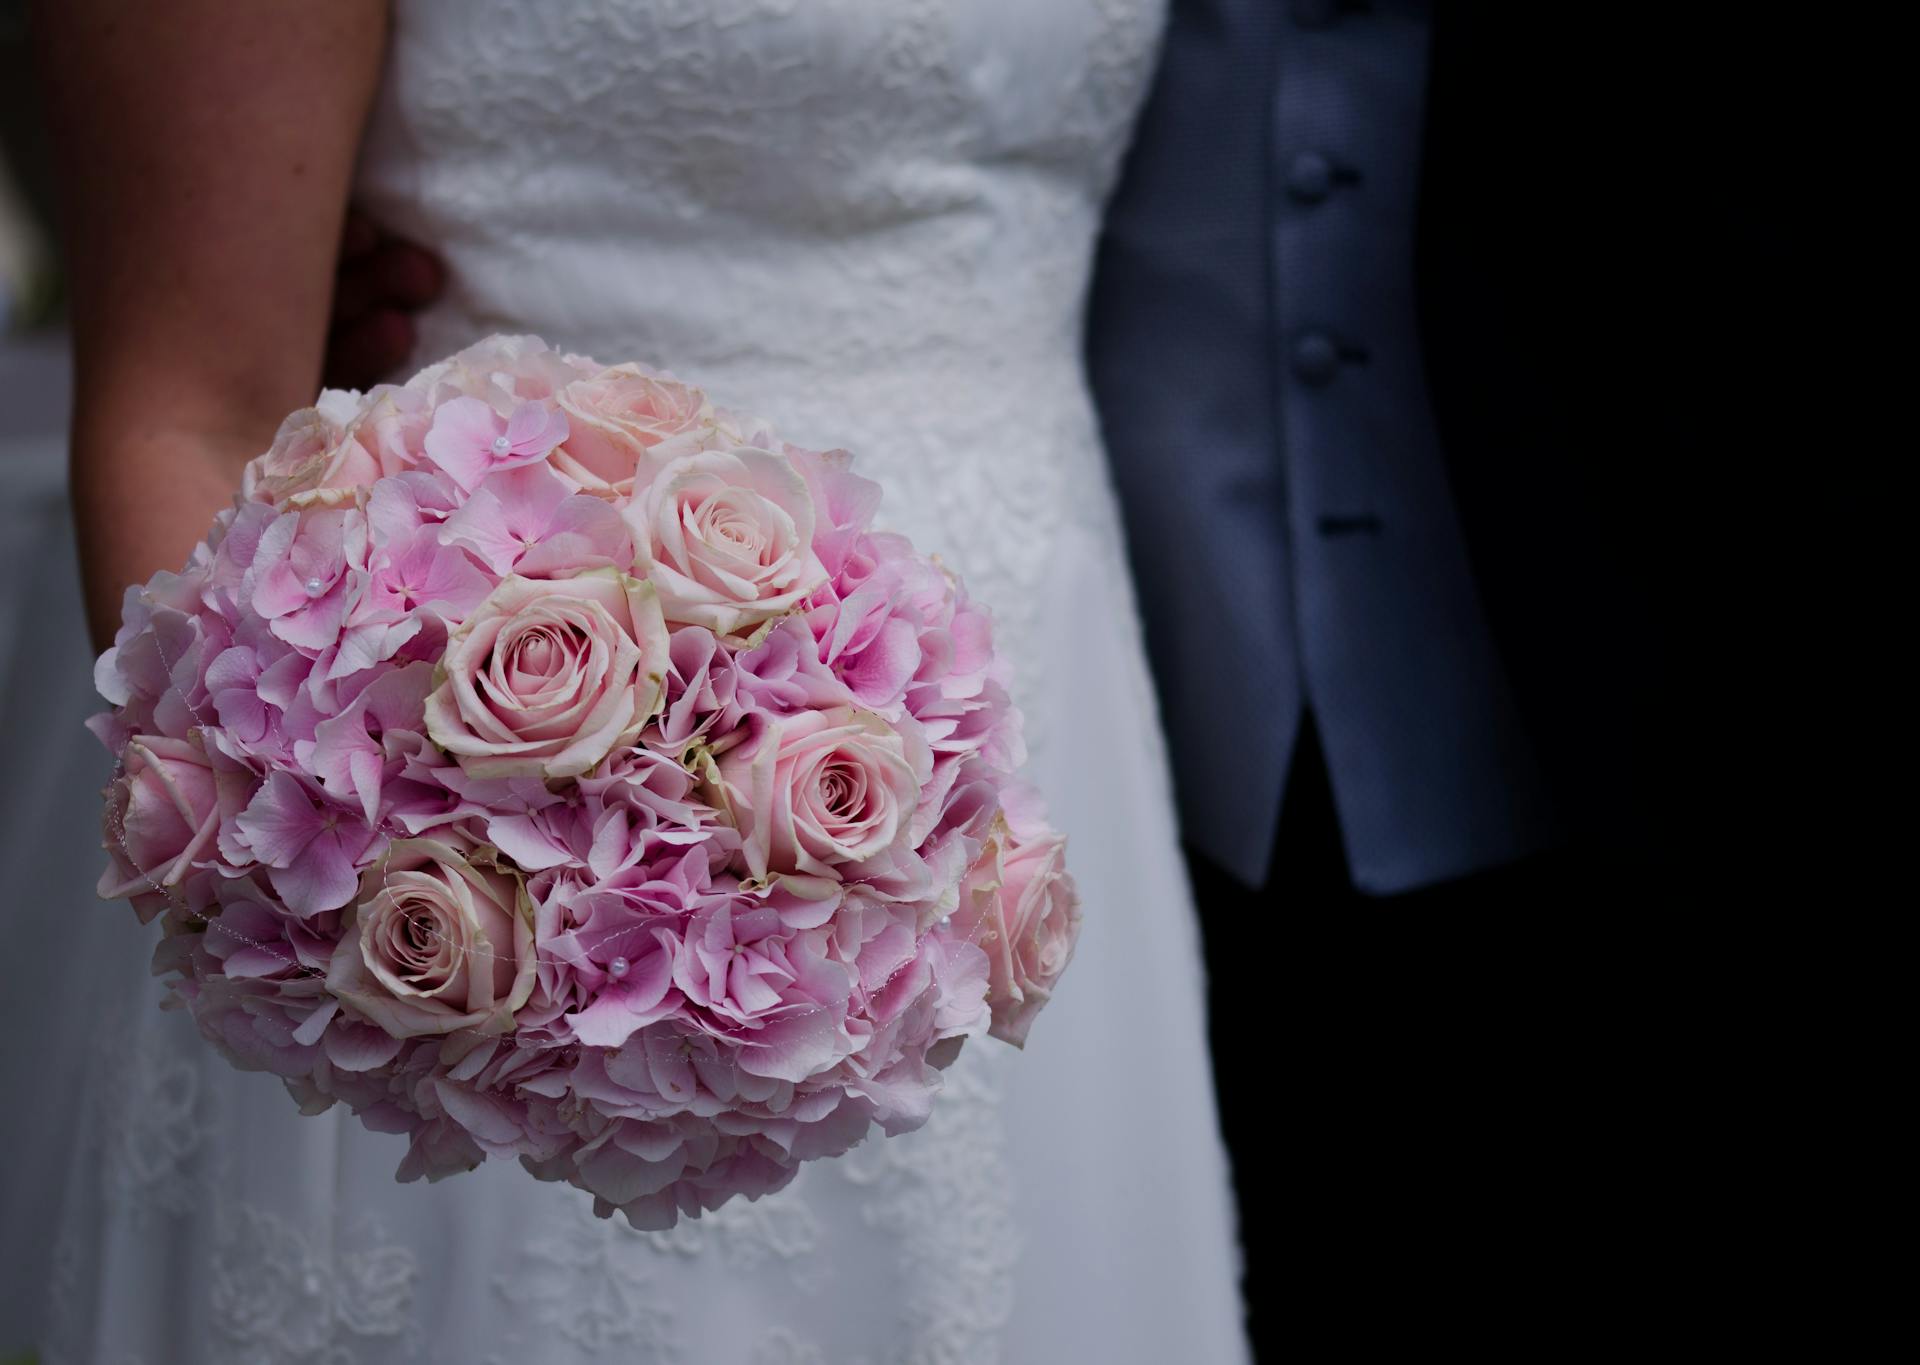 A bride holding flowers | Source: Pexels